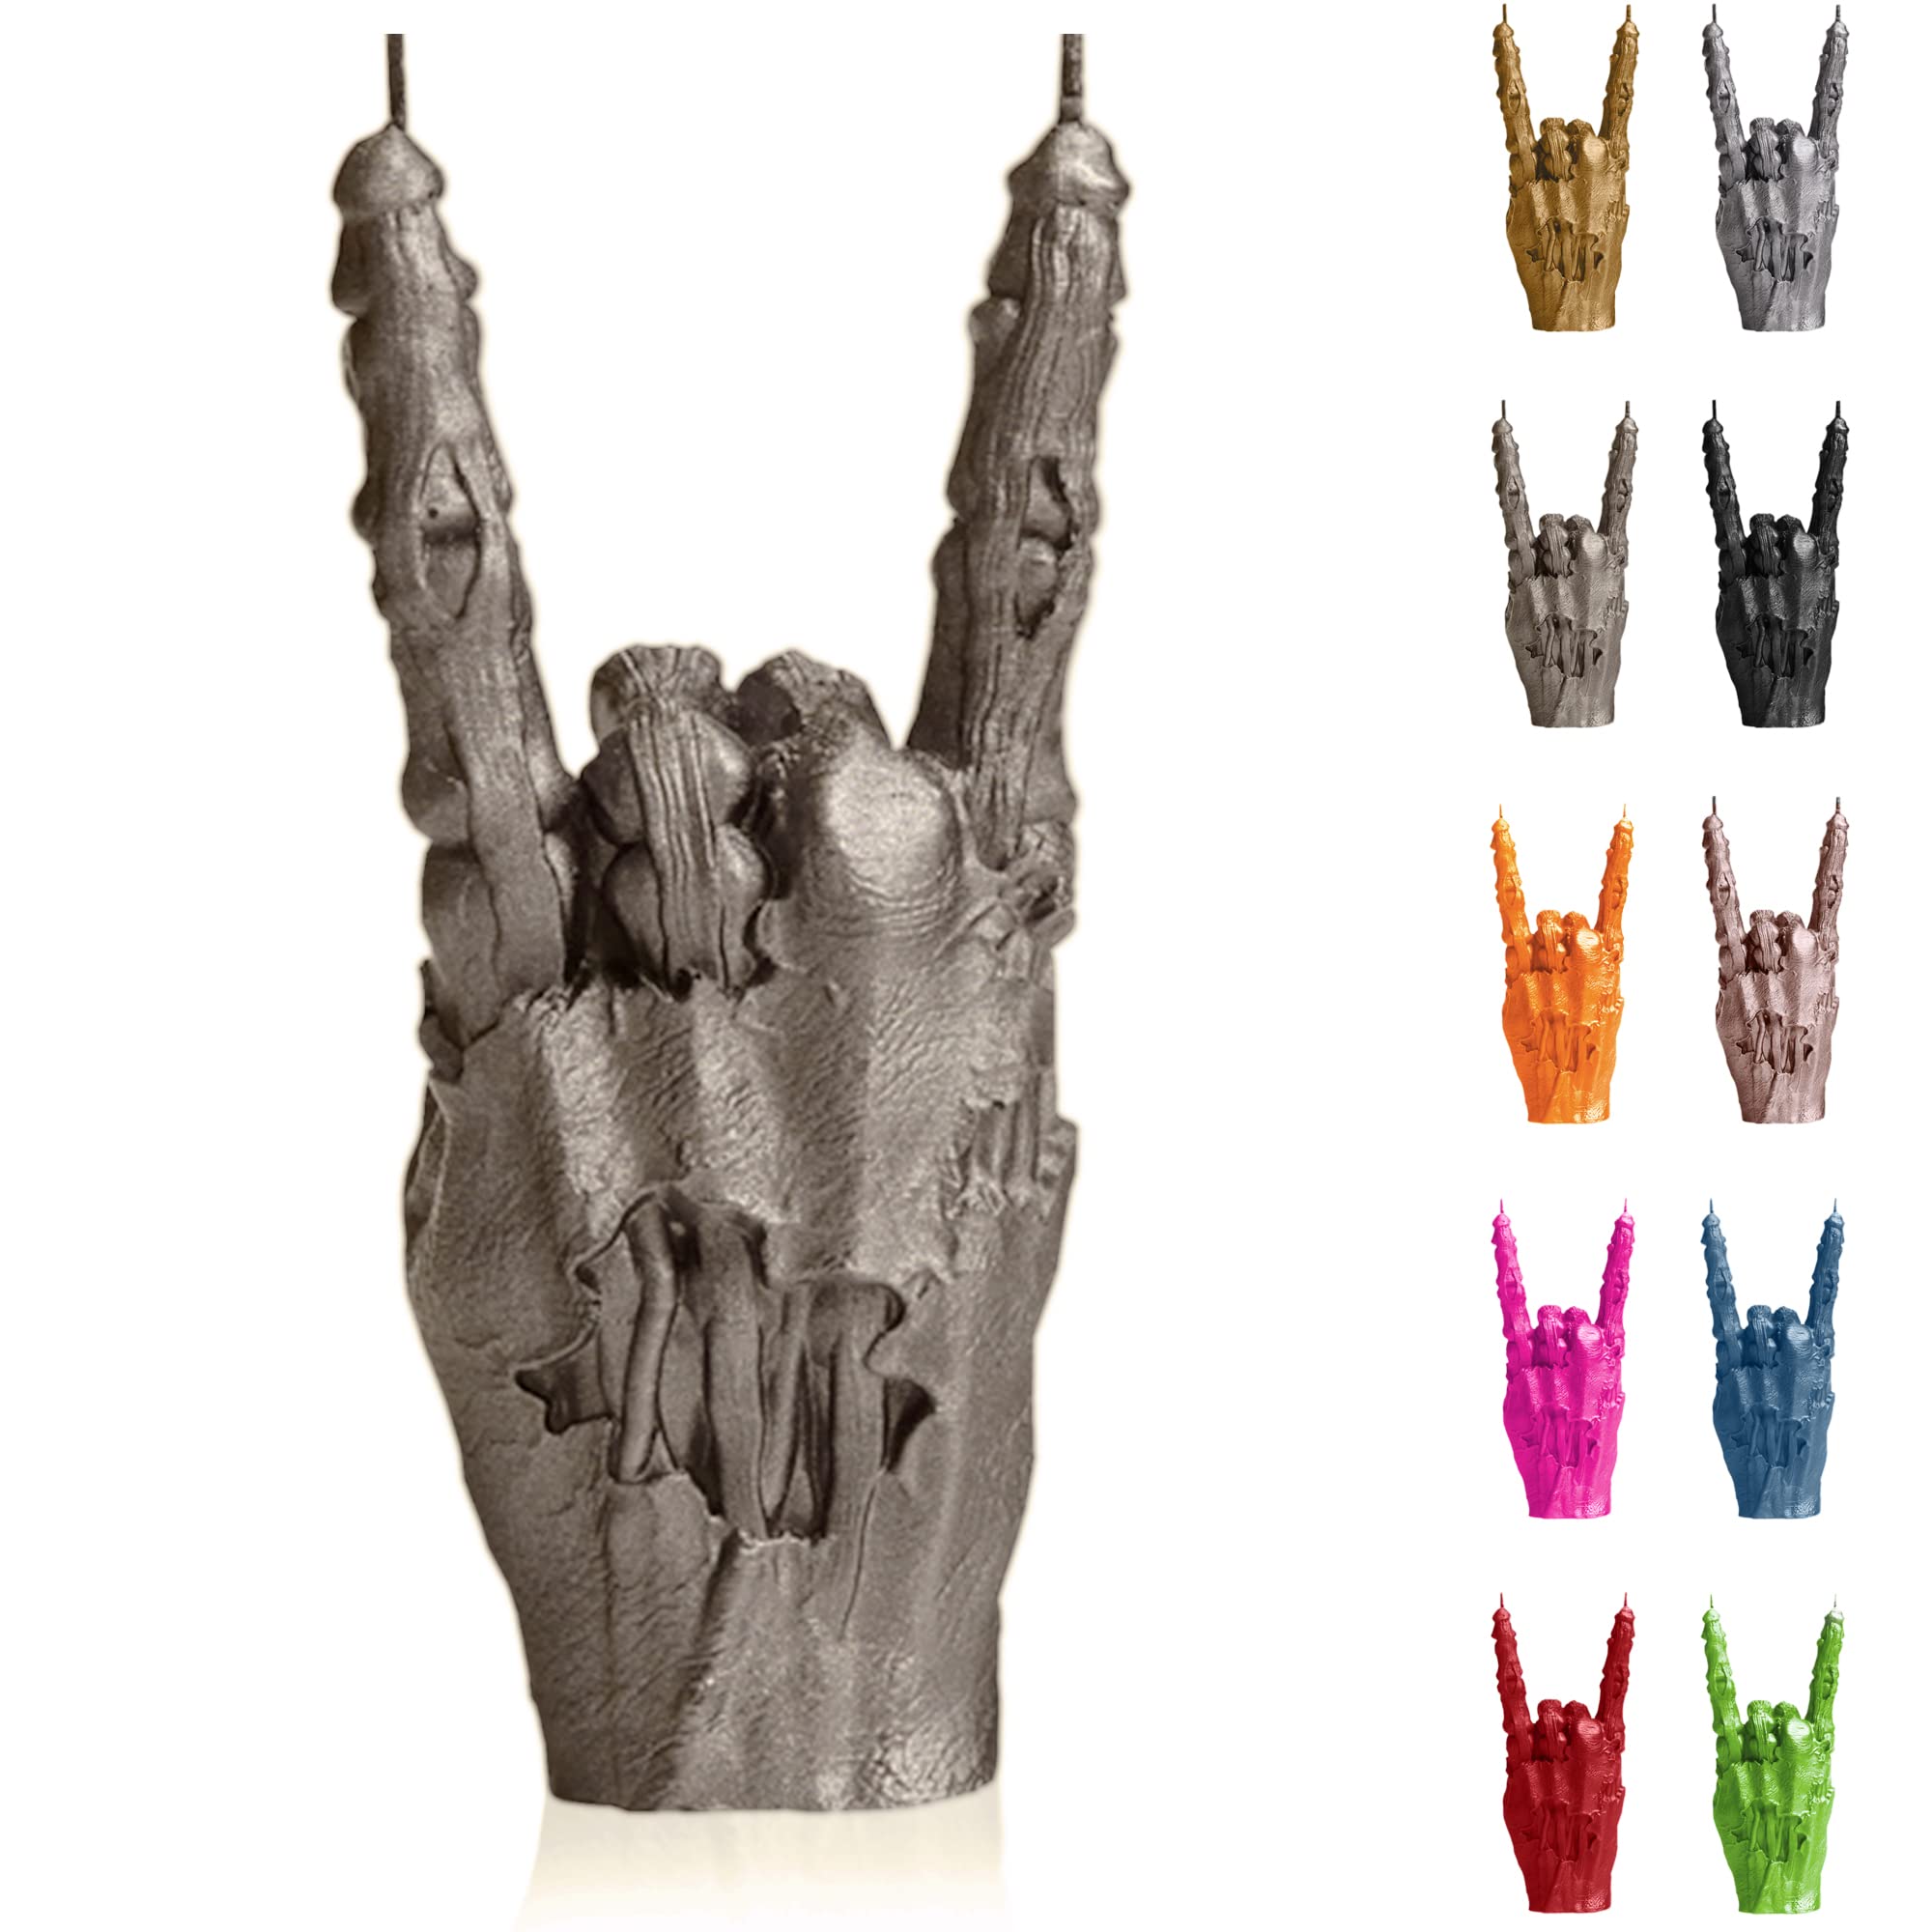 Candellana Kerze RCK Zombie Hand Low Poly, Höhe: 22,2 cm, Handgemacht in der EU